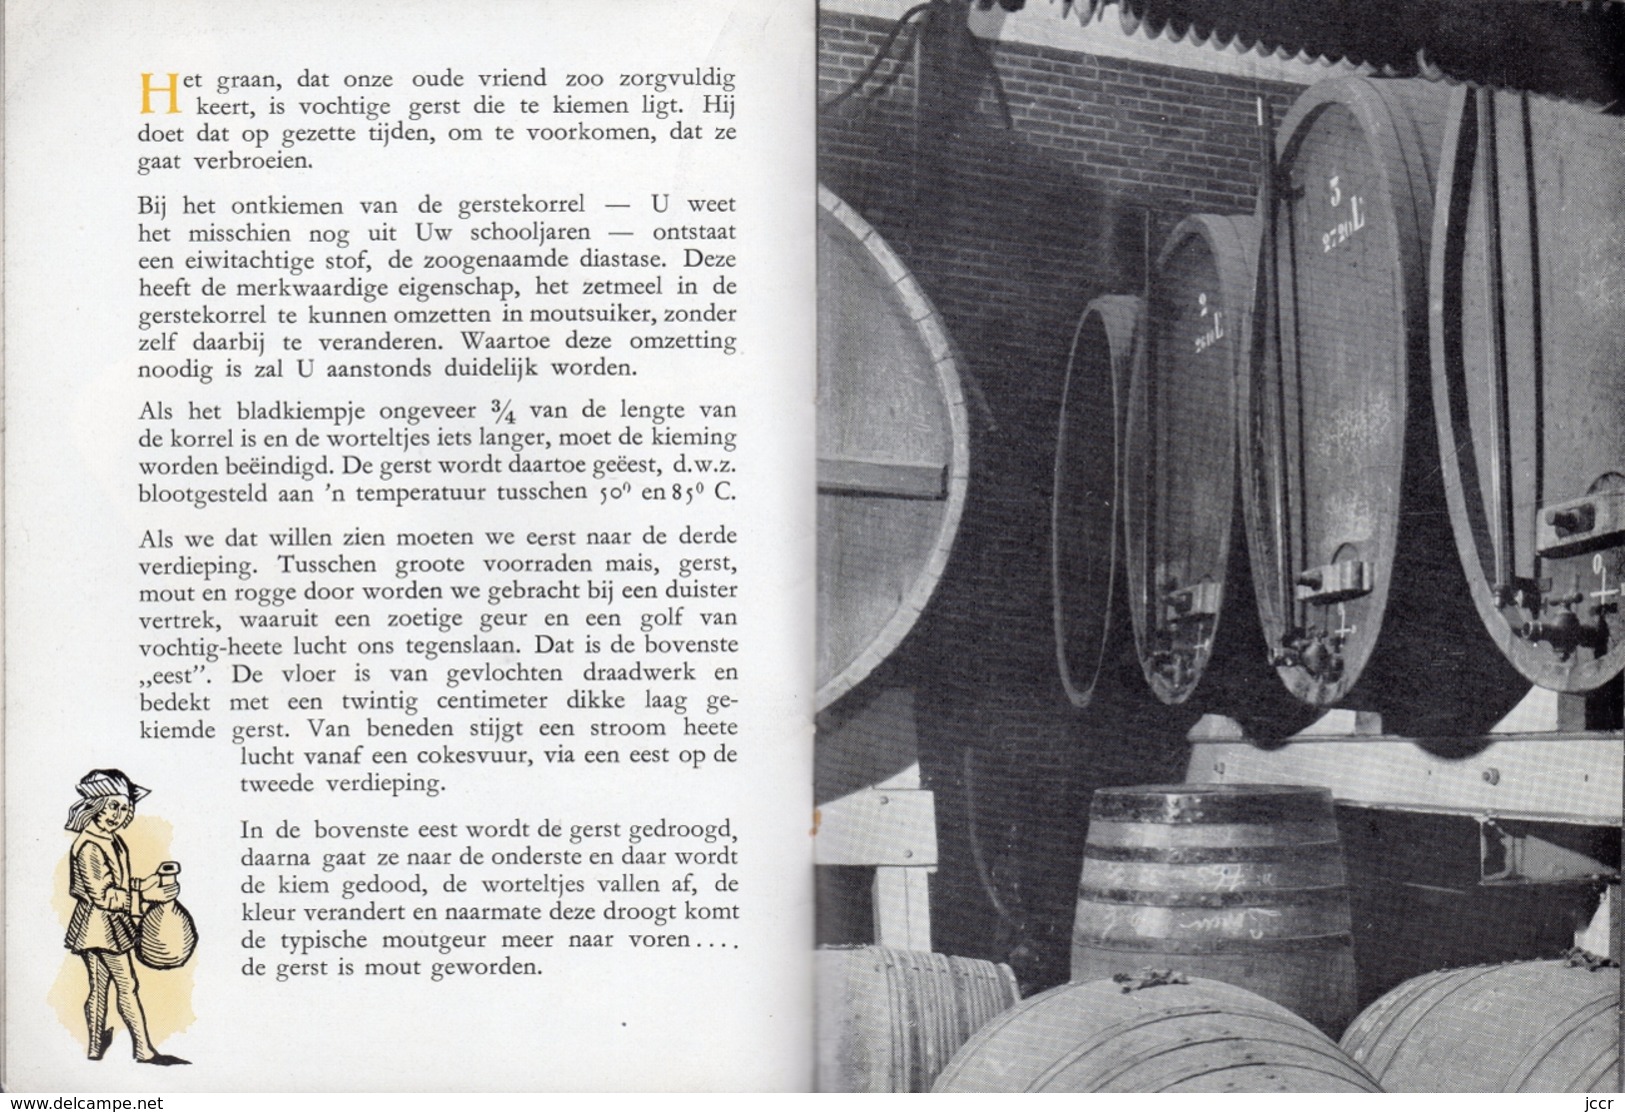 Bols Z.o.g. (zeer Oude Genever) (genièvre) - Vers 1960 - Cucina & Vini